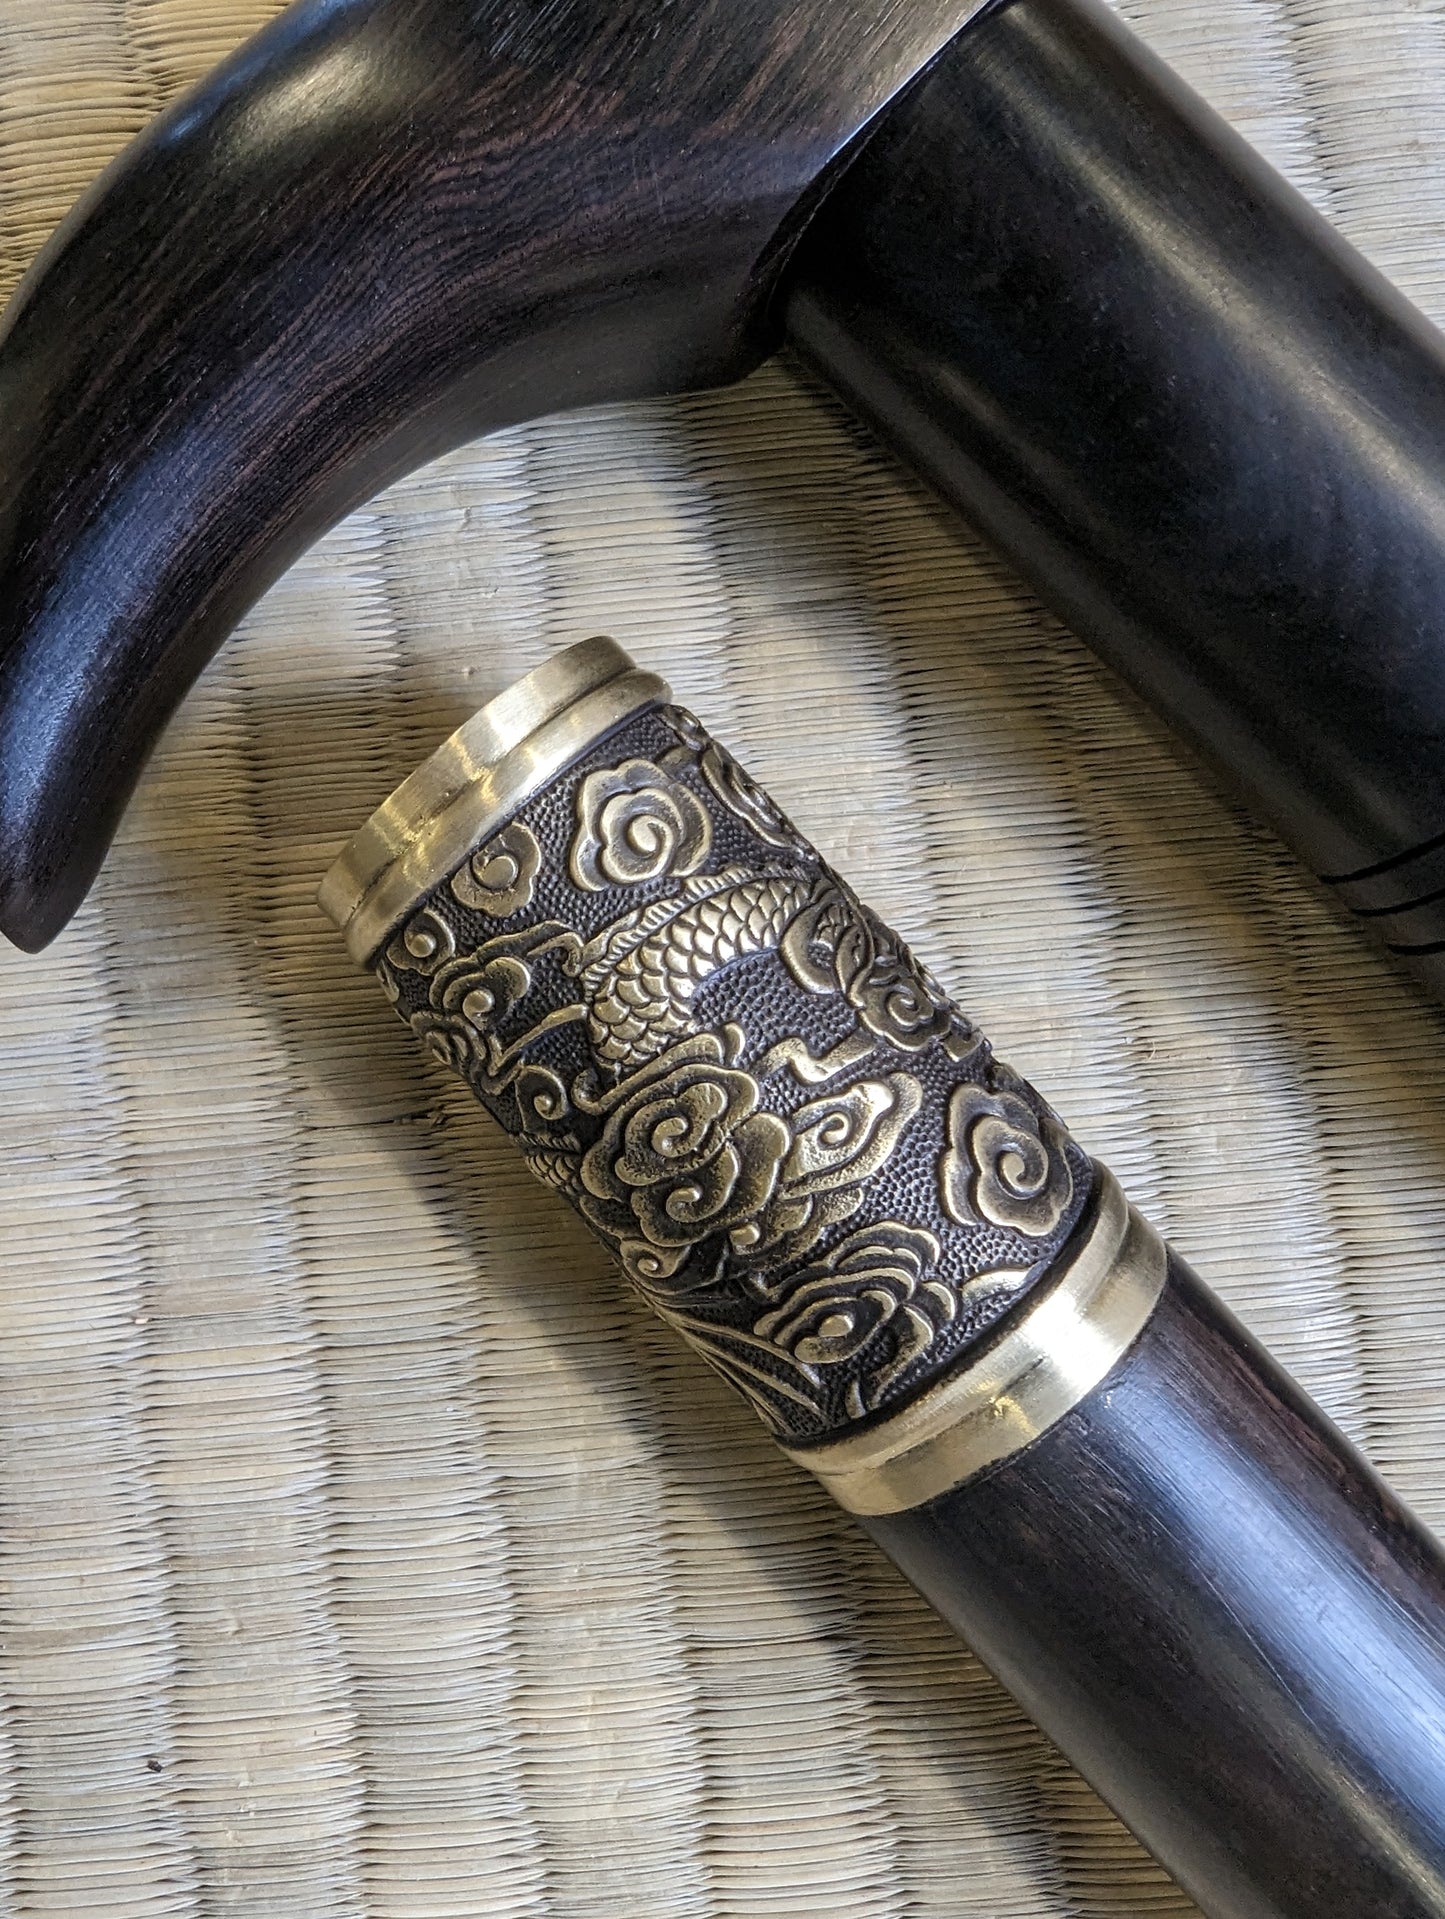 Cane Sword, Brass fittings